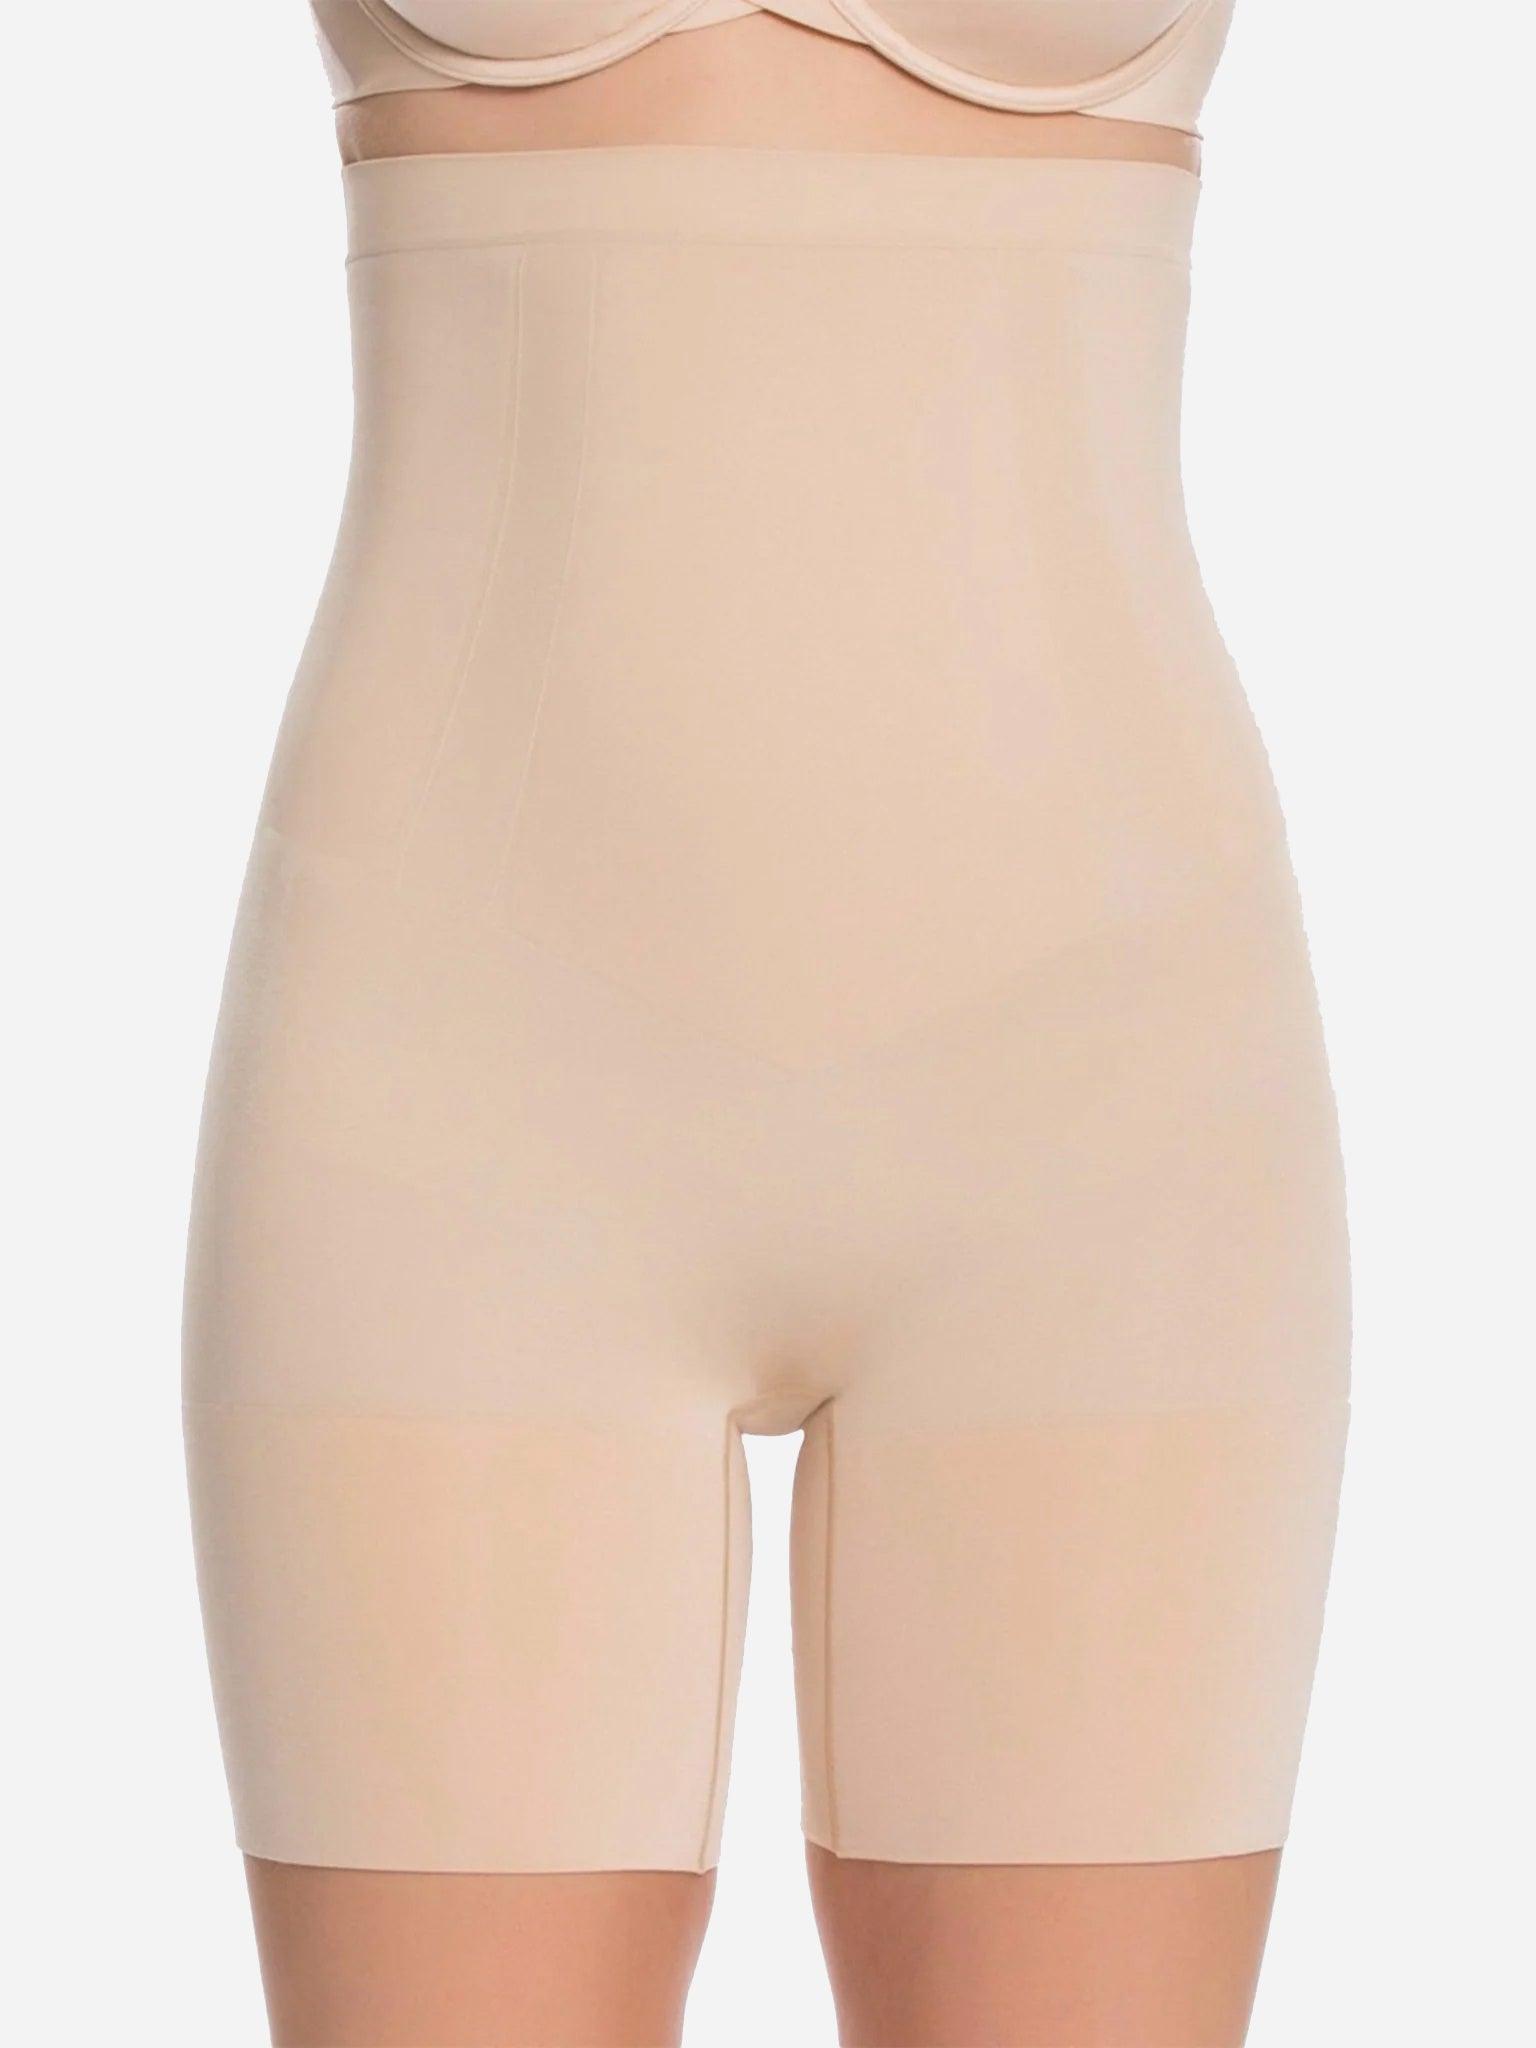 Body Beautiful 1371 Nude Hi Waisted Double Front Panel Panty Girdle –